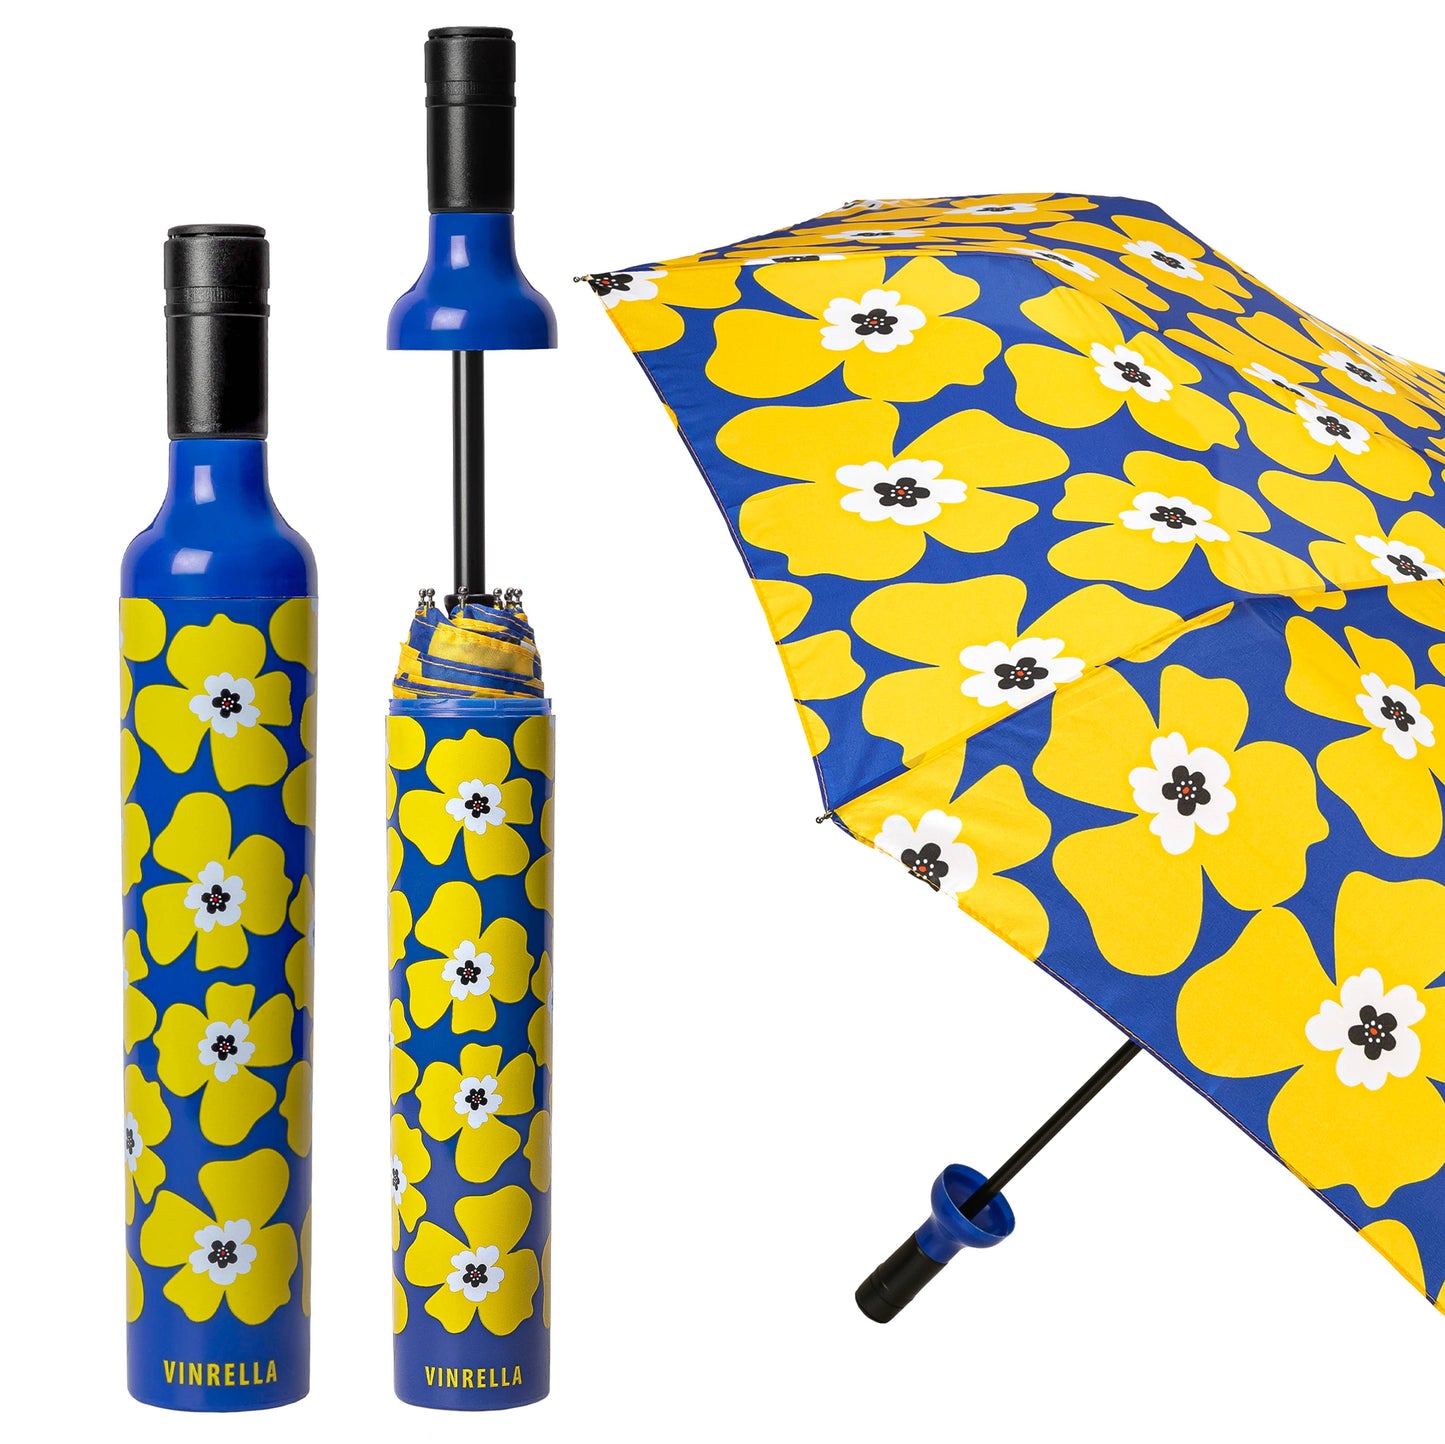 Vinrella - Nikki on Blue Bottle Umbrella